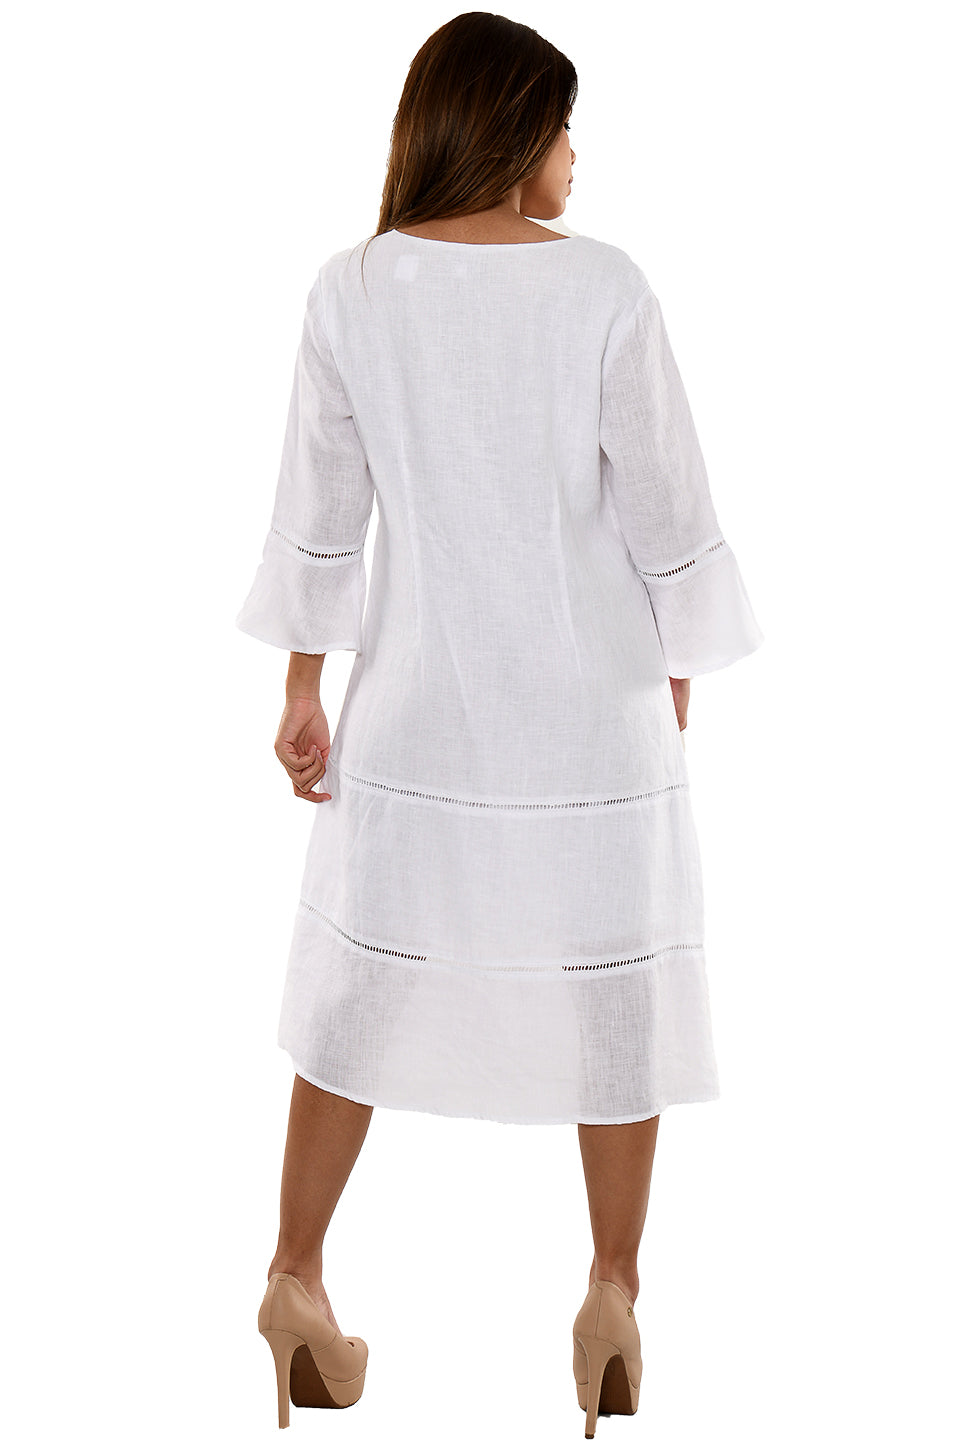 Azucar Ladies 3/4 Sleeves & Ruffled Hem Long Dress - LLWD2082